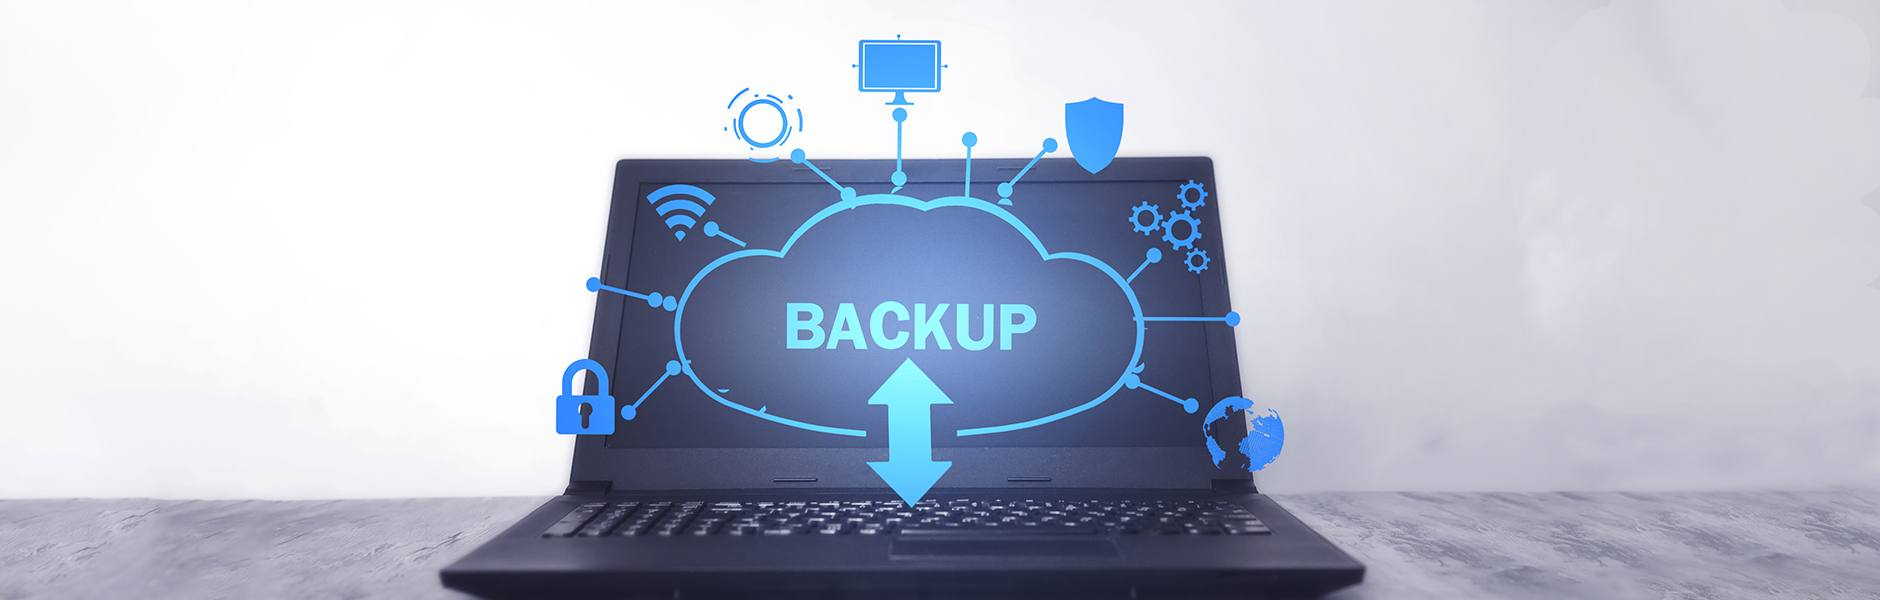 How should a backup system be designed?